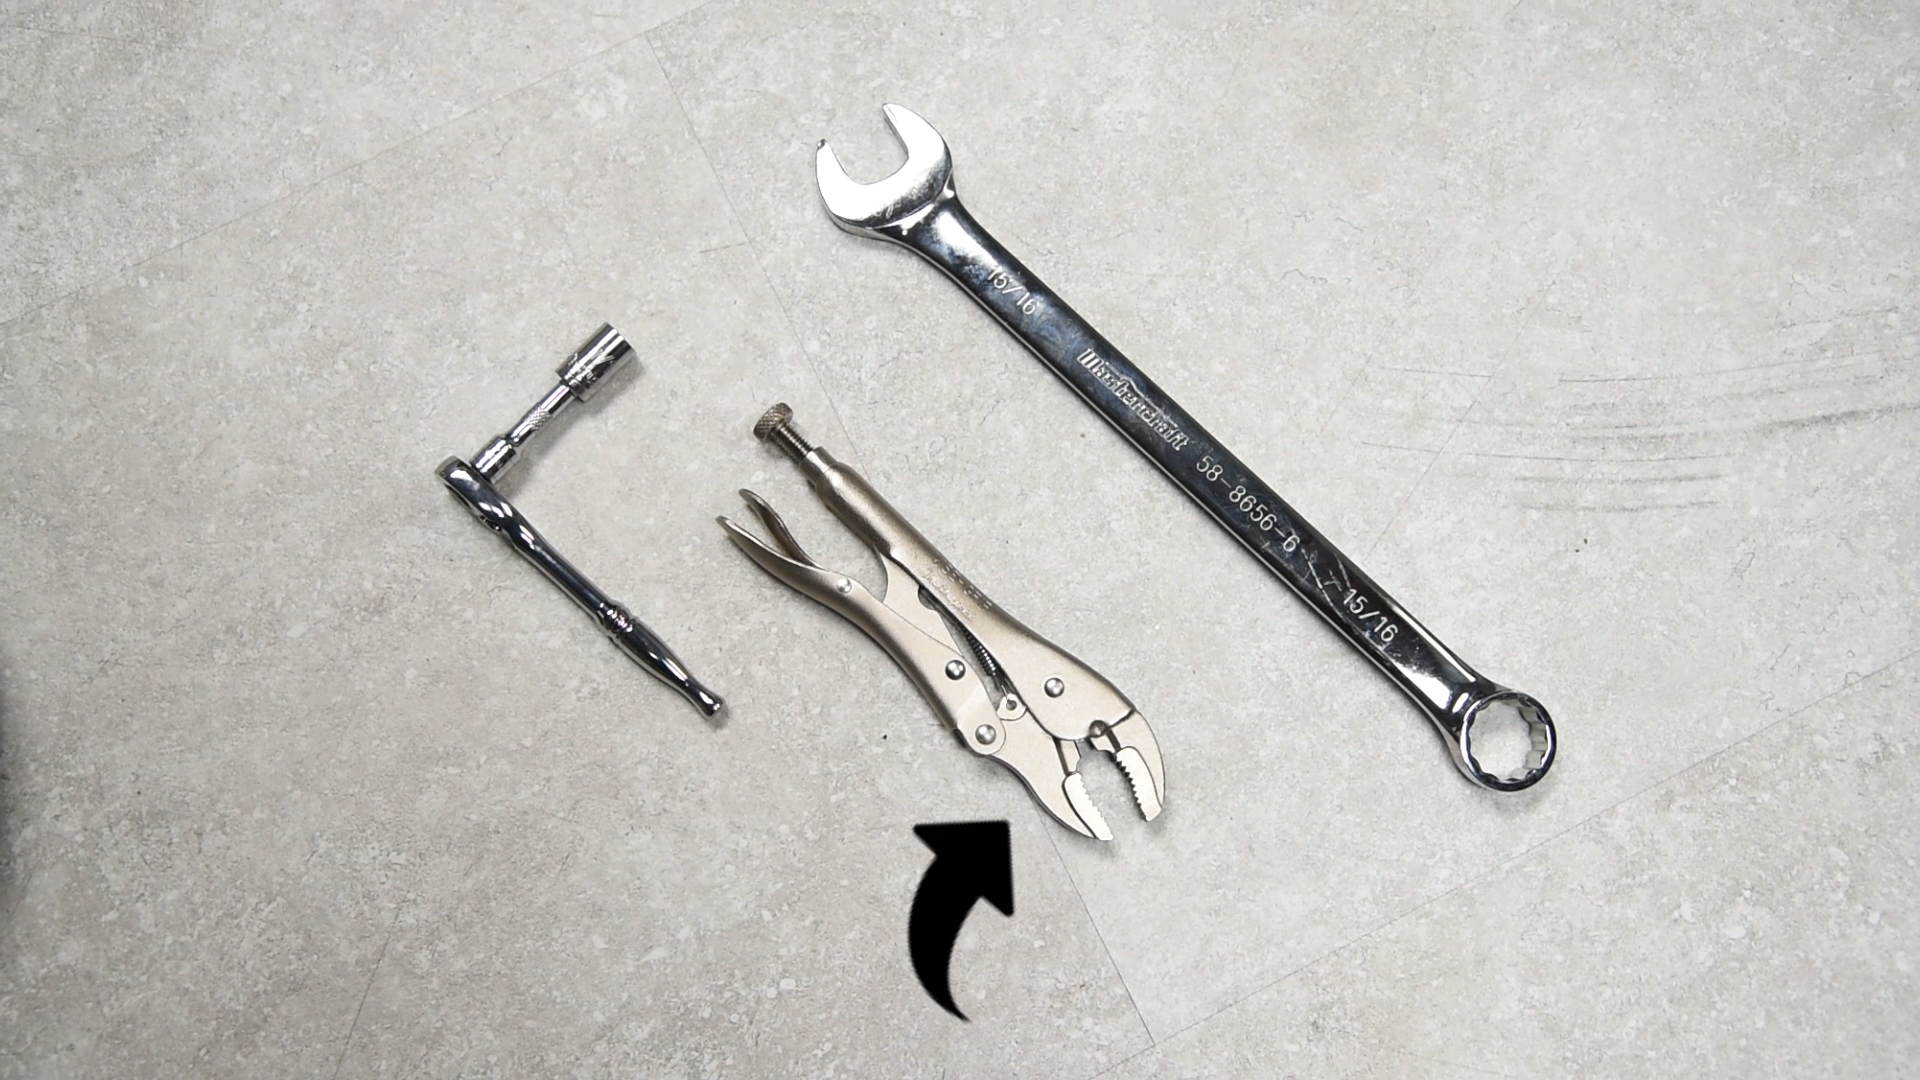 channel locks or vise grip locking pliers tools